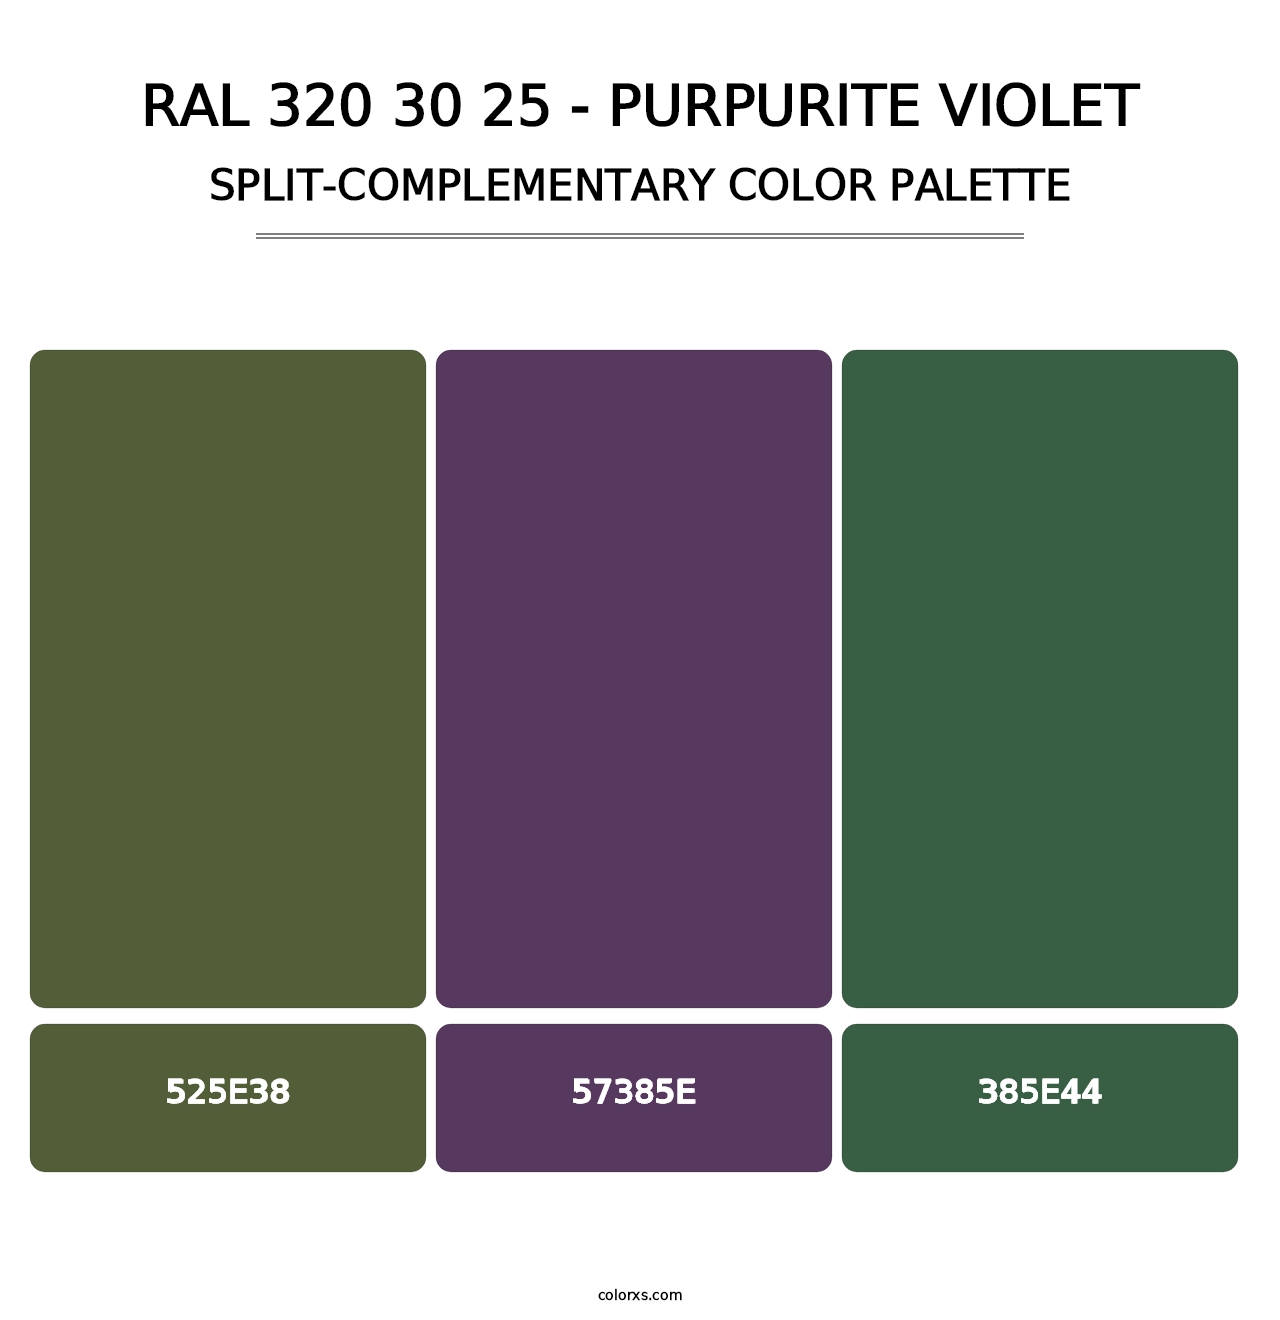 RAL 320 30 25 - Purpurite Violet - Split-Complementary Color Palette